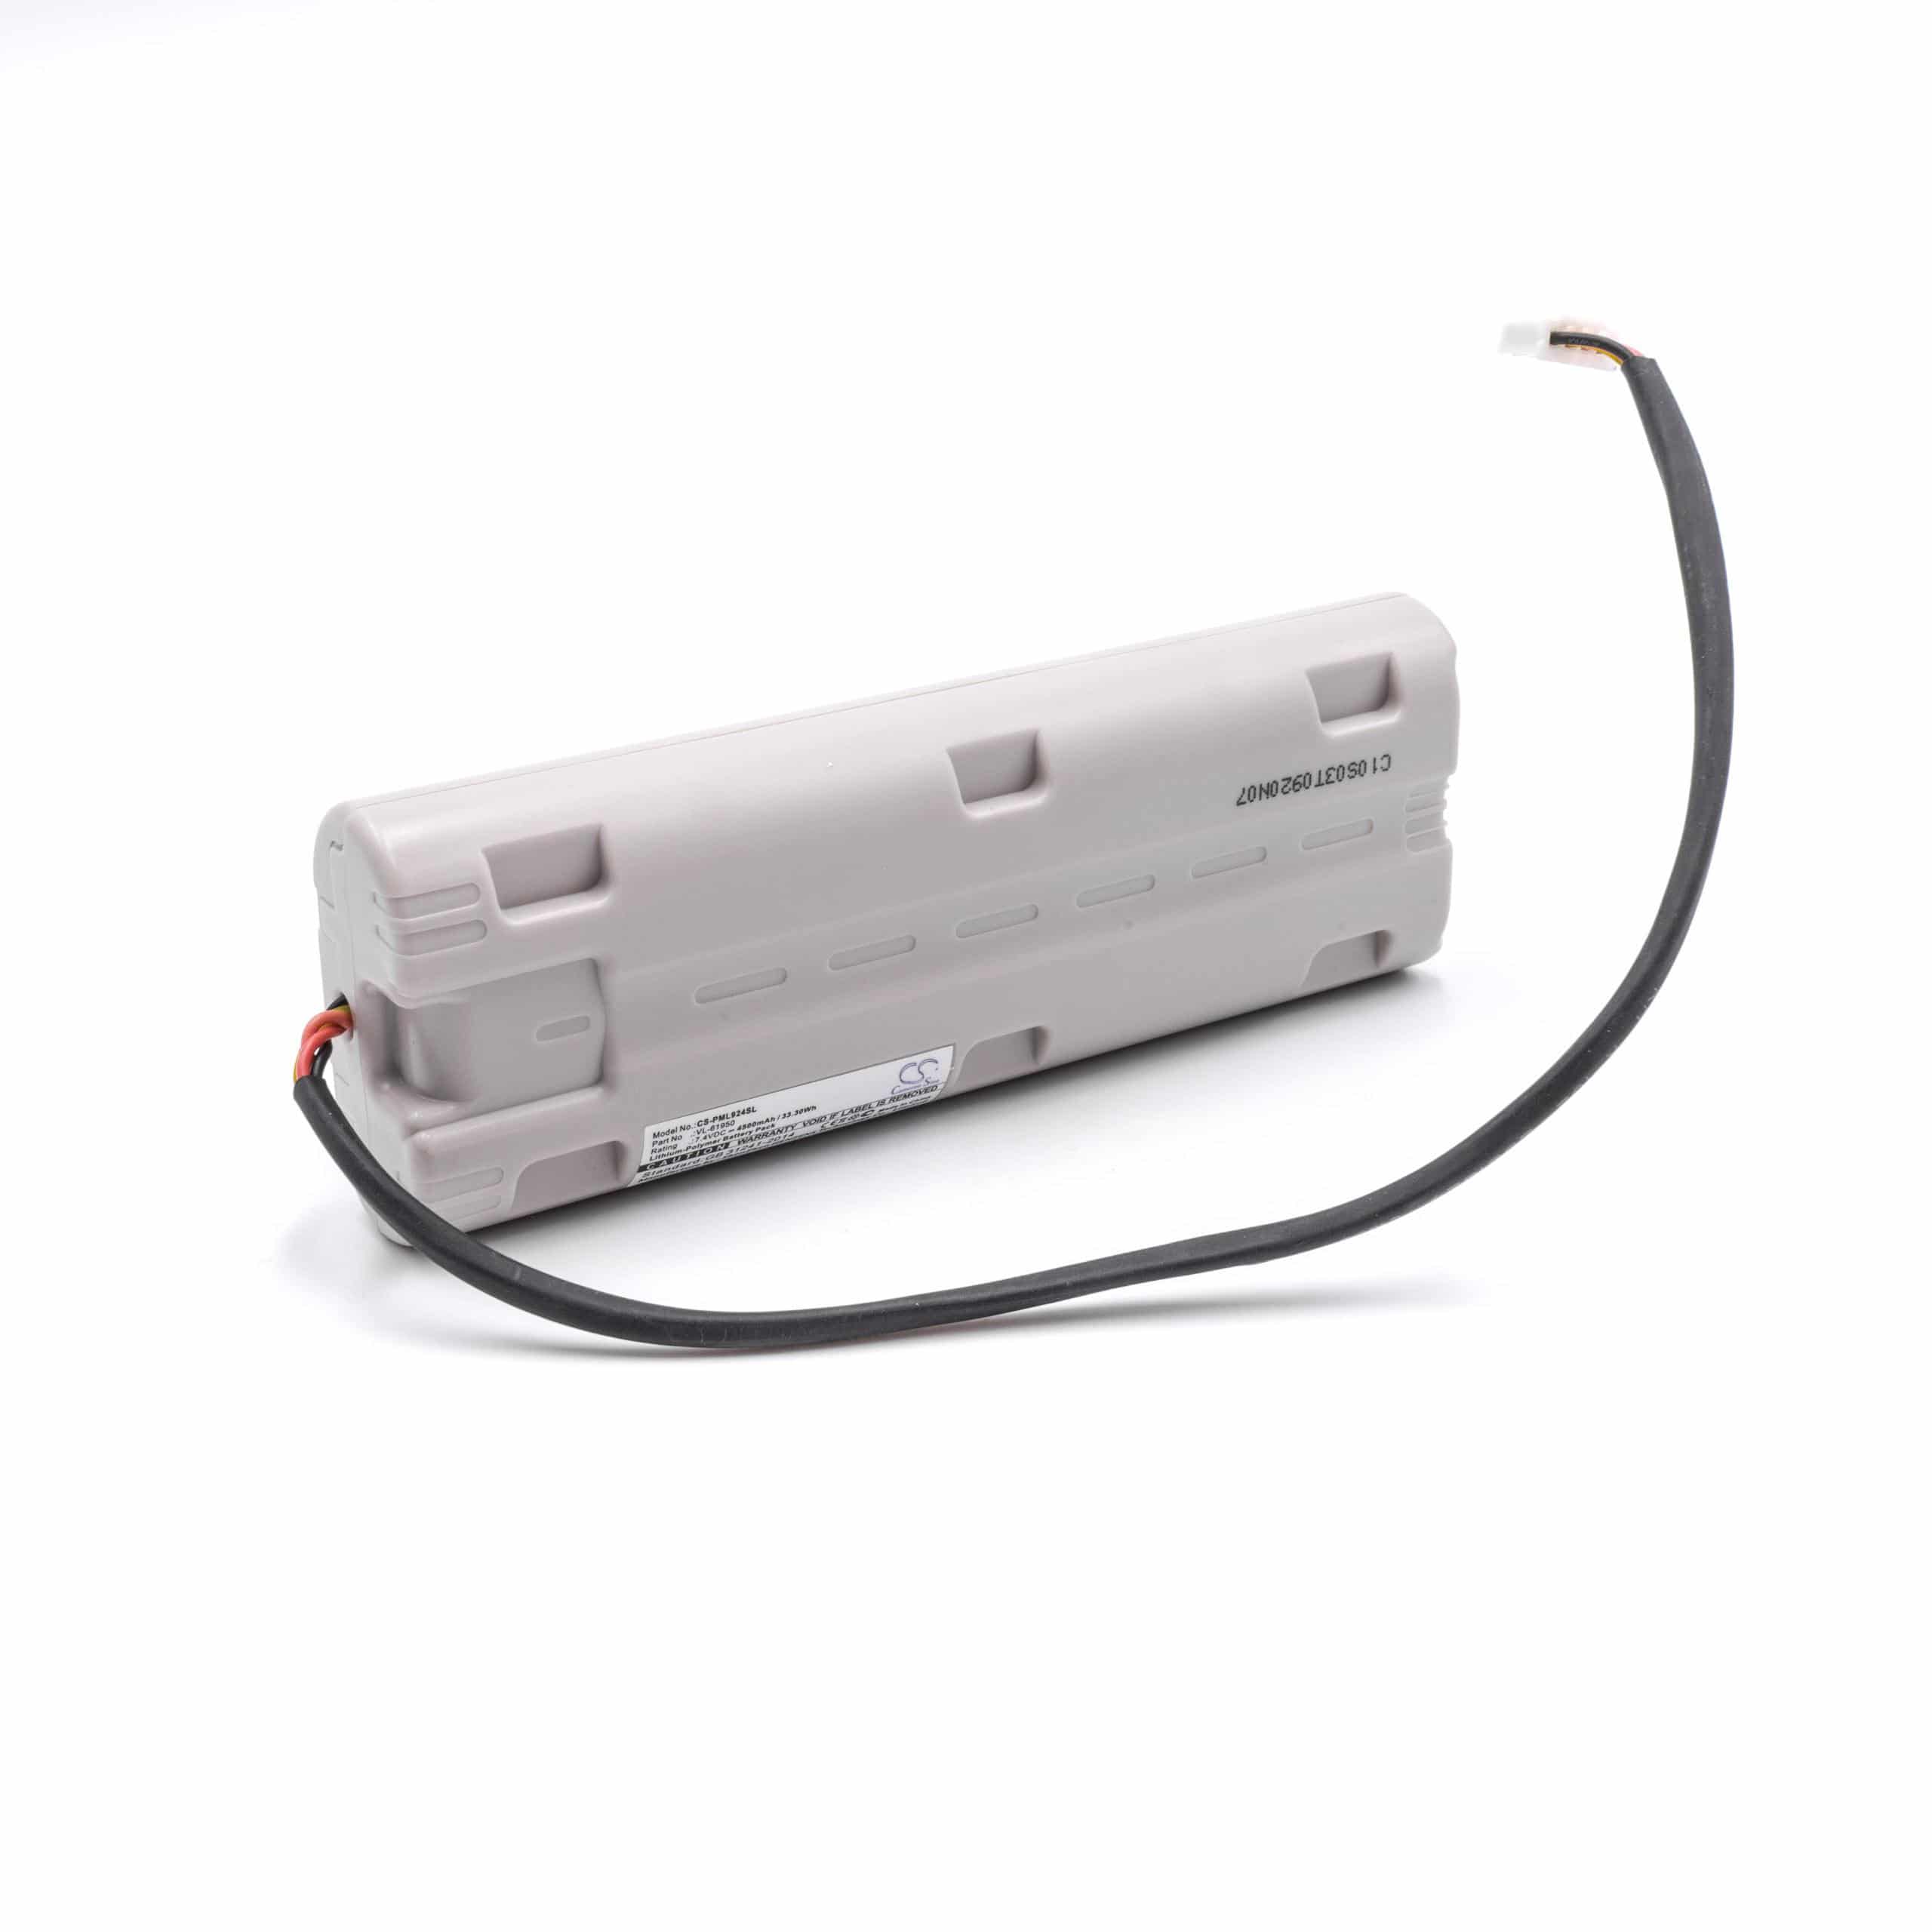 DAB Radio Battery Replacement for Pure VL-61950 - 4500mAh 7.4V Li-polymer